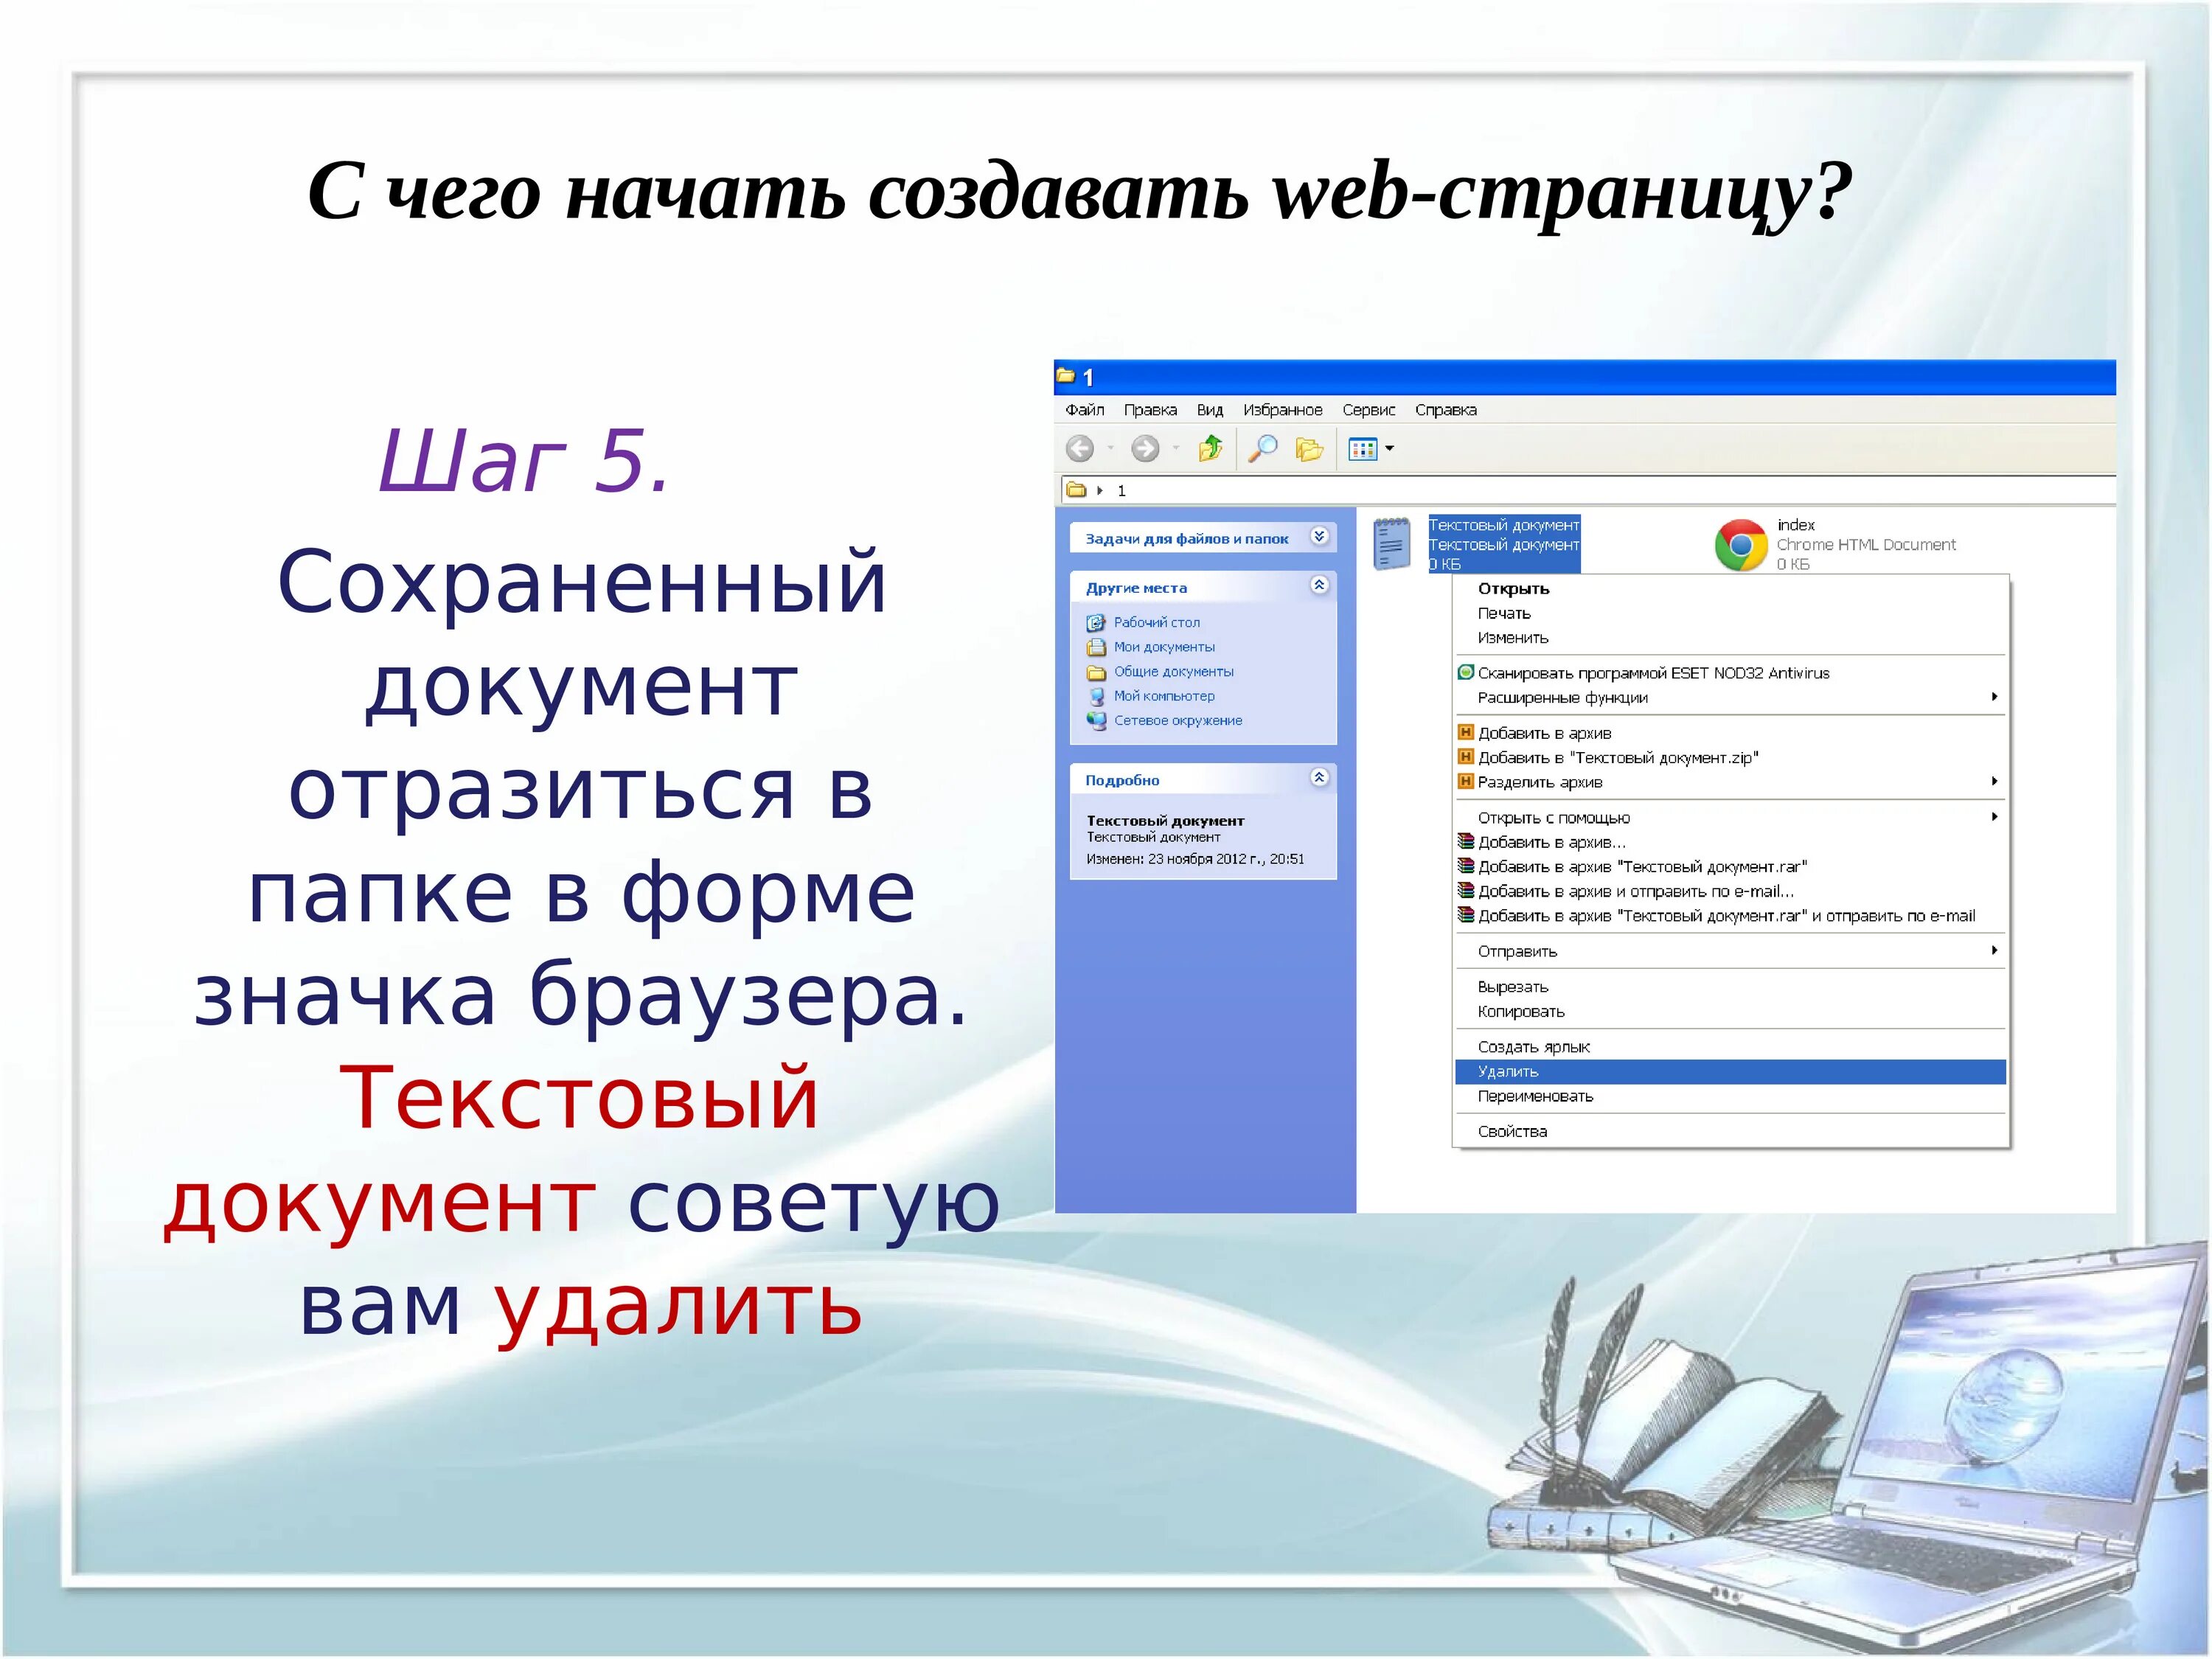 Создание веб страницы. Html презентация. Текстовый документ. Web-страница (html-документ). Текст документа отражает